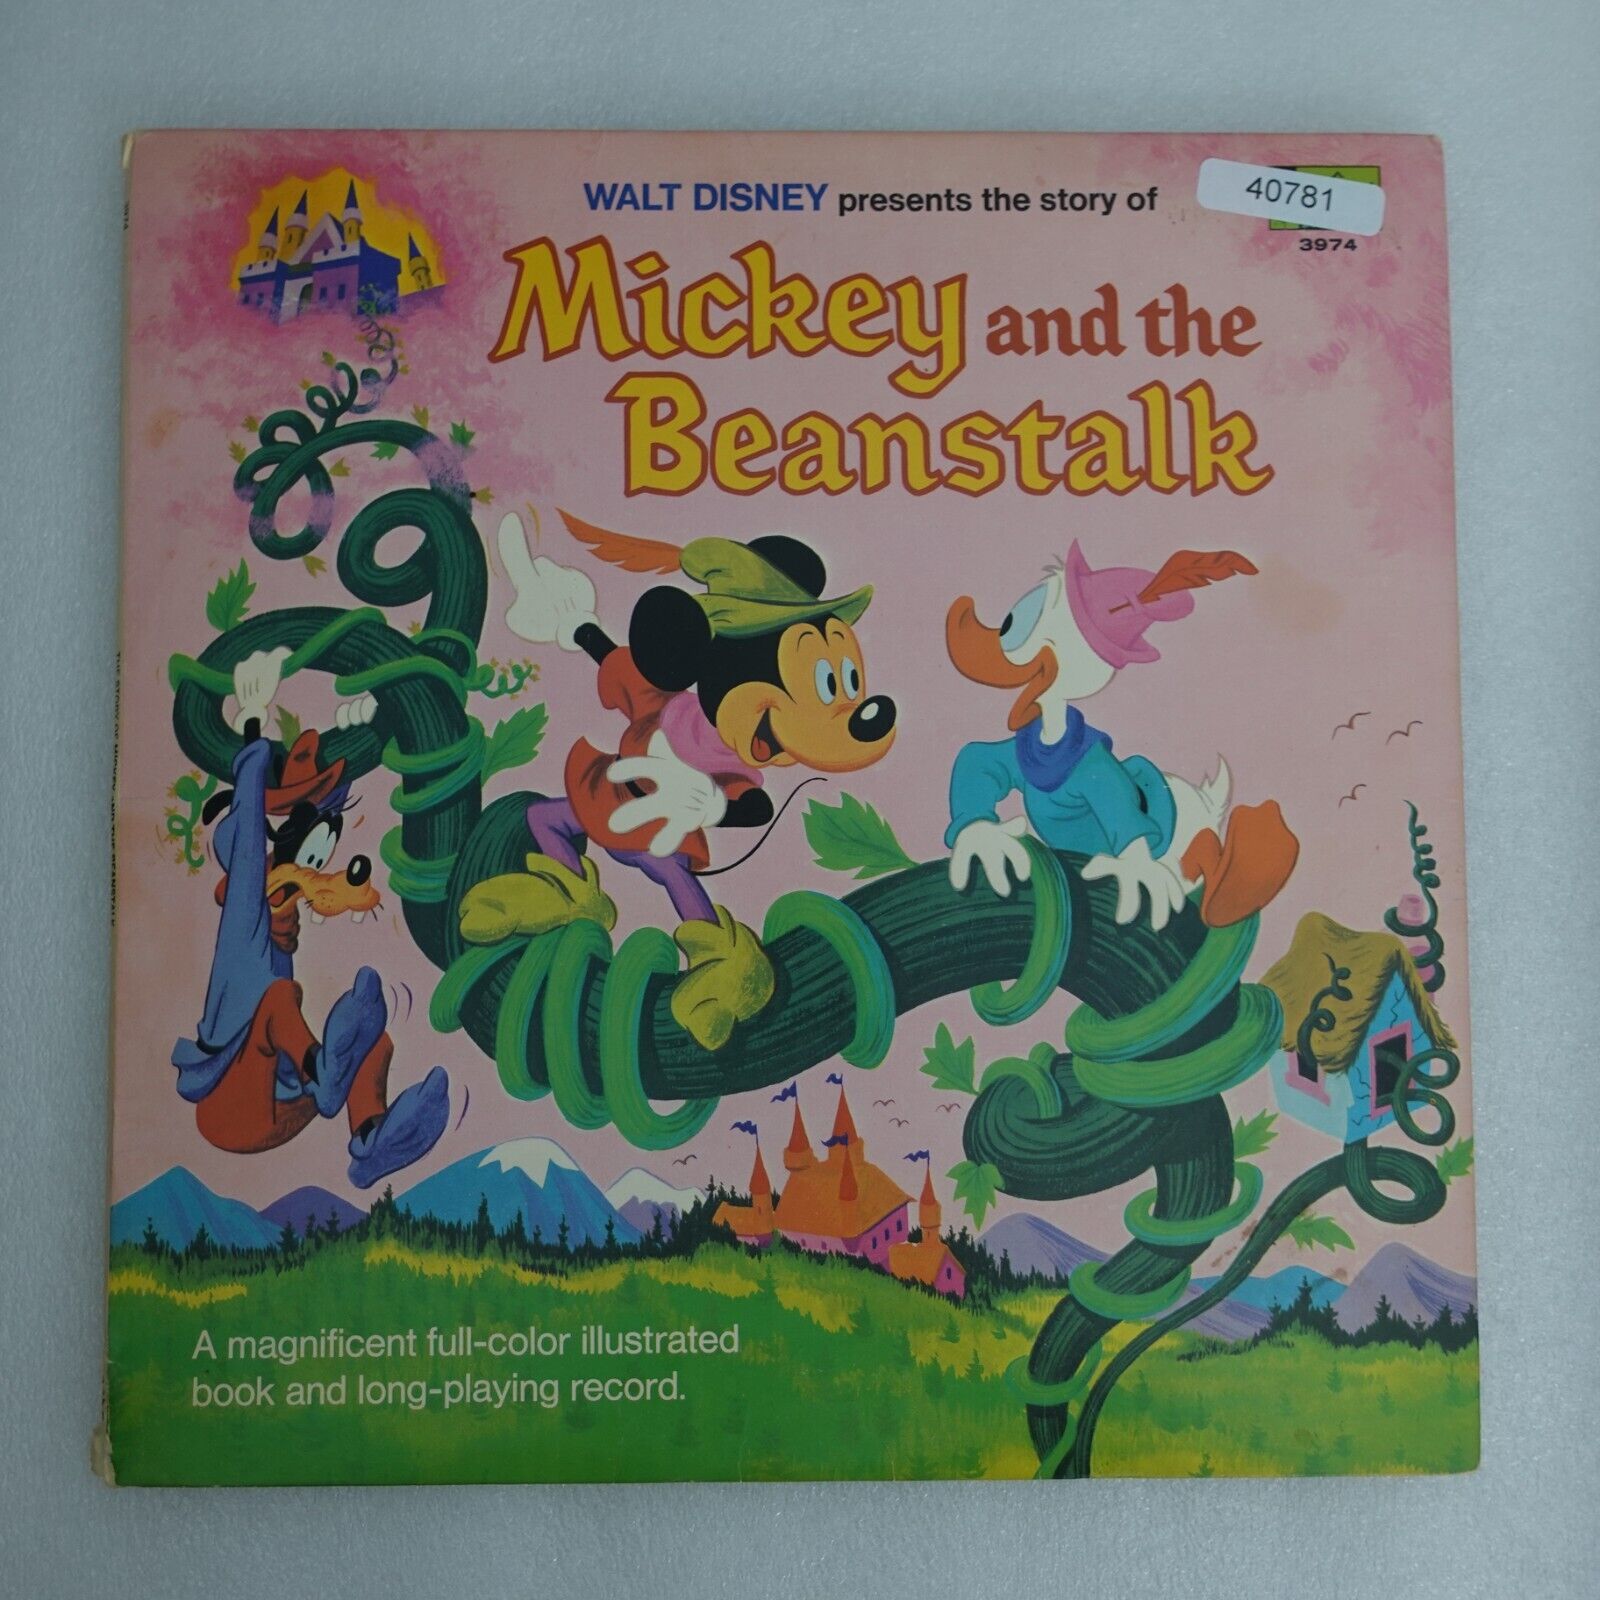 Walt Disney Mickey And The Beanstalk DISNEYLAND 3974 LP Vinyl Record Album